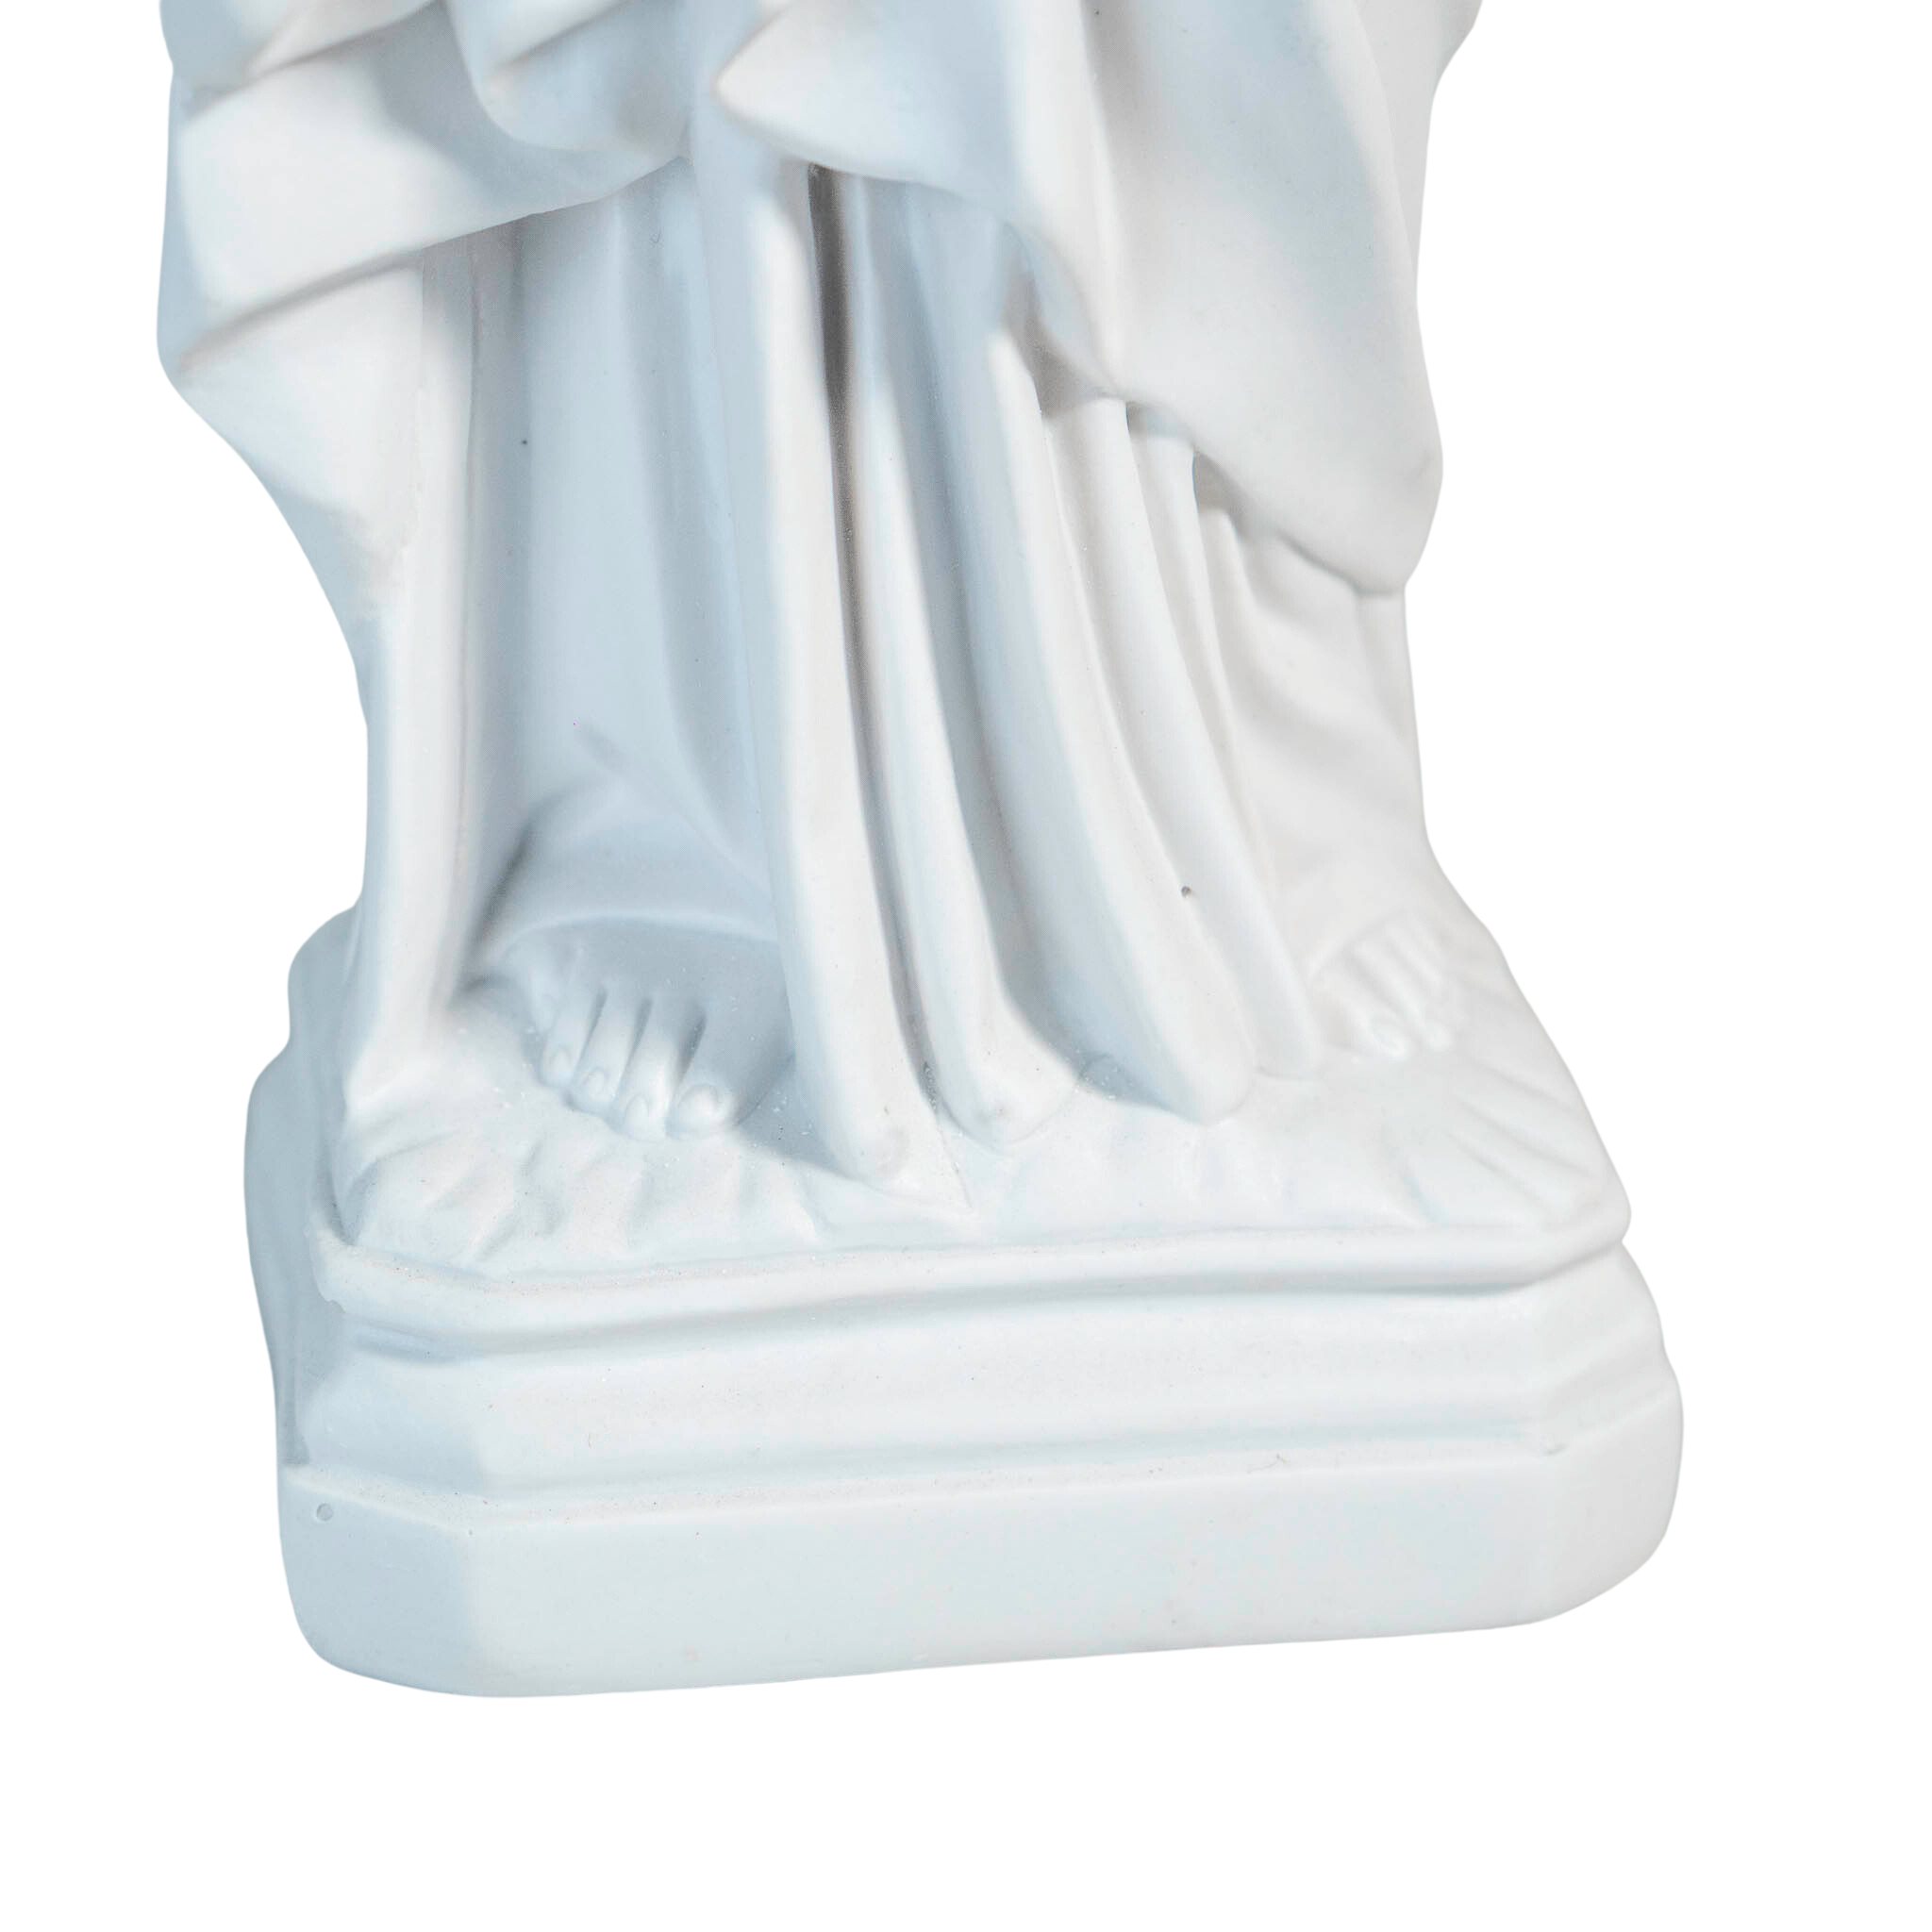 White statue of The Immaculate Heart of the Mary / Estatua Blanca del Inmaculado Corazon de Maria